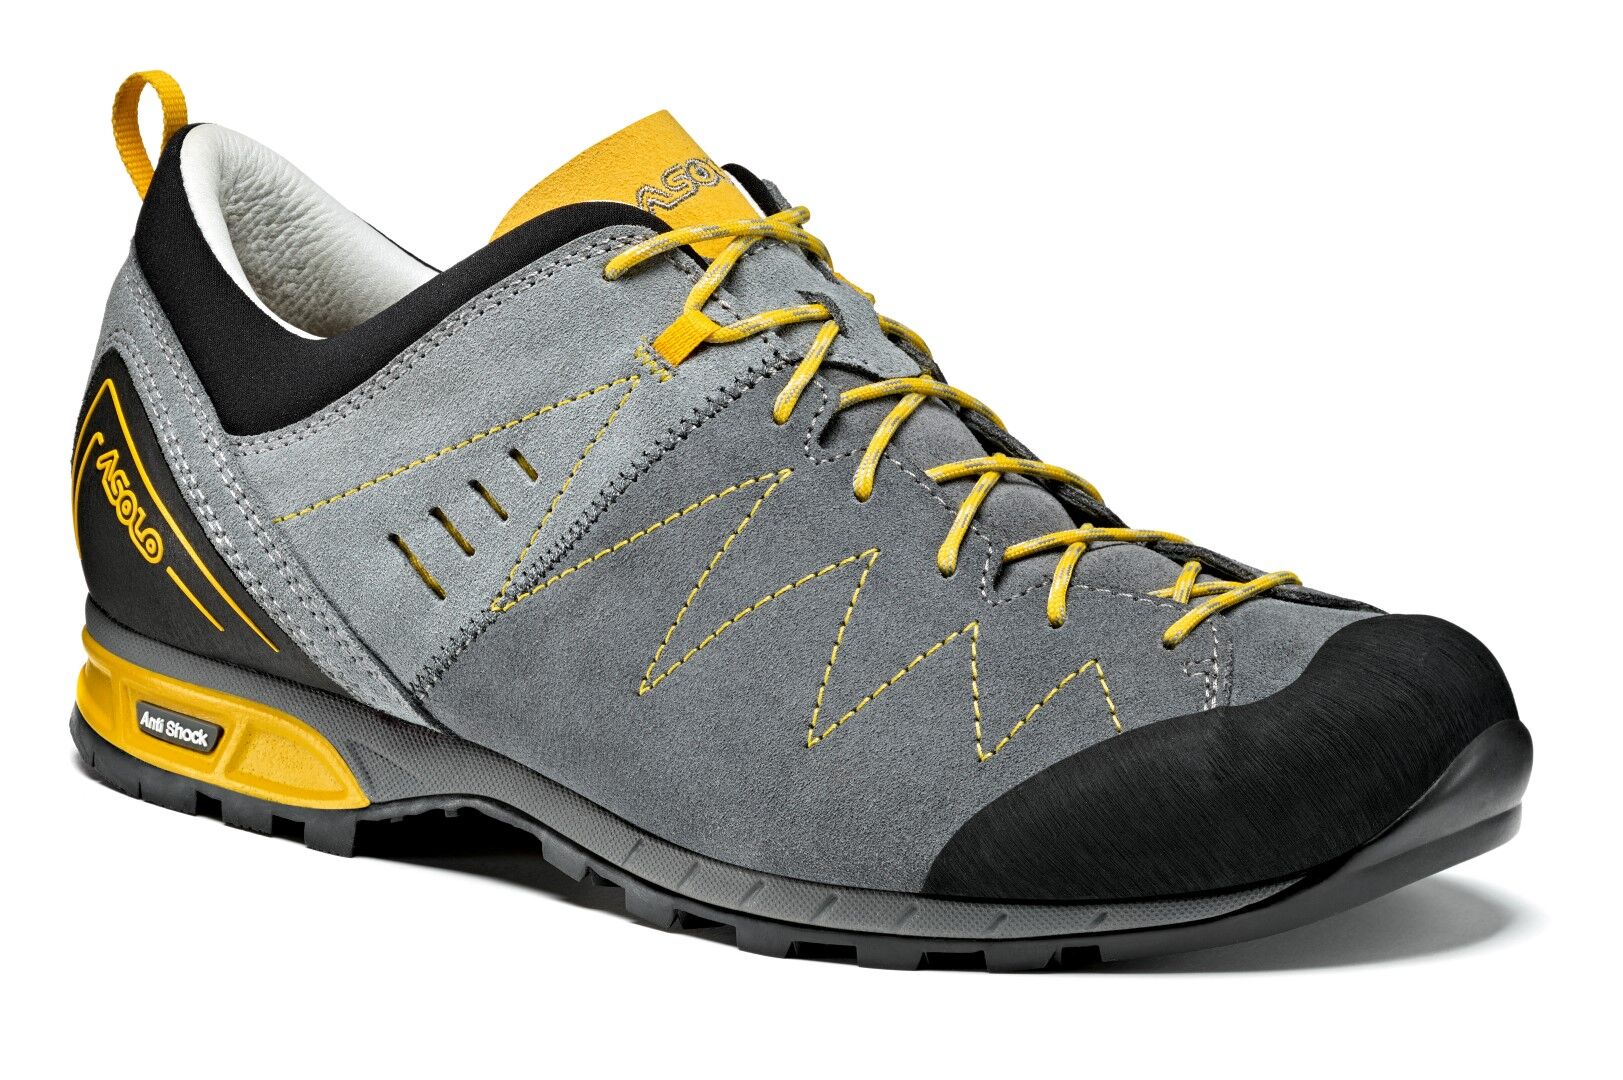 Asolo Track - Approach shoes - Men's